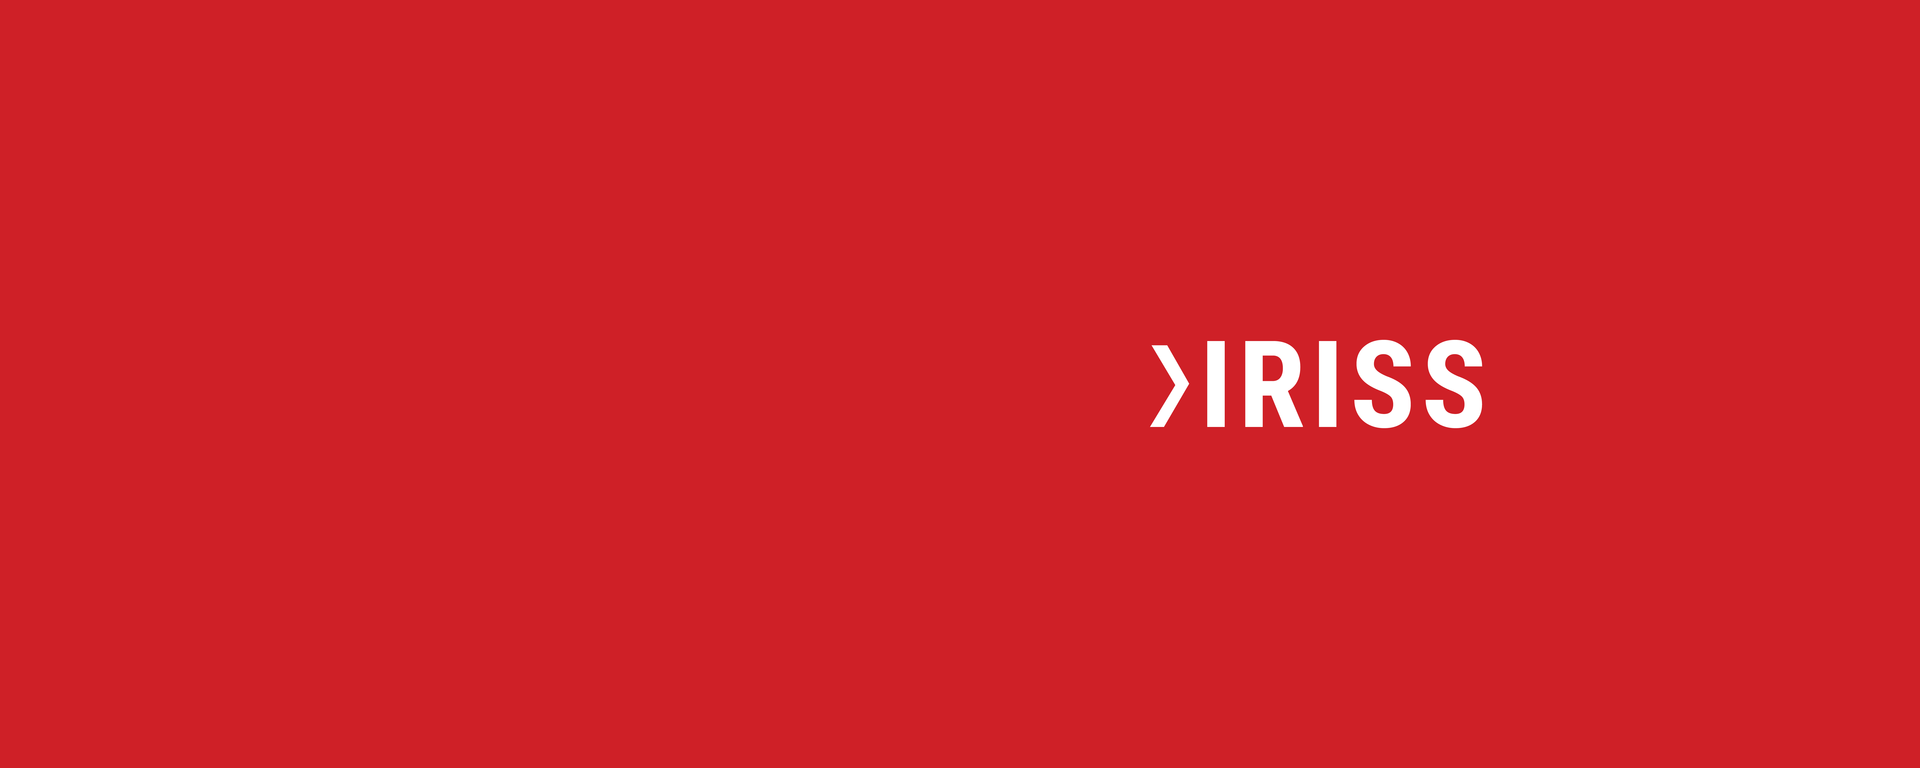 IRISS logo on red background